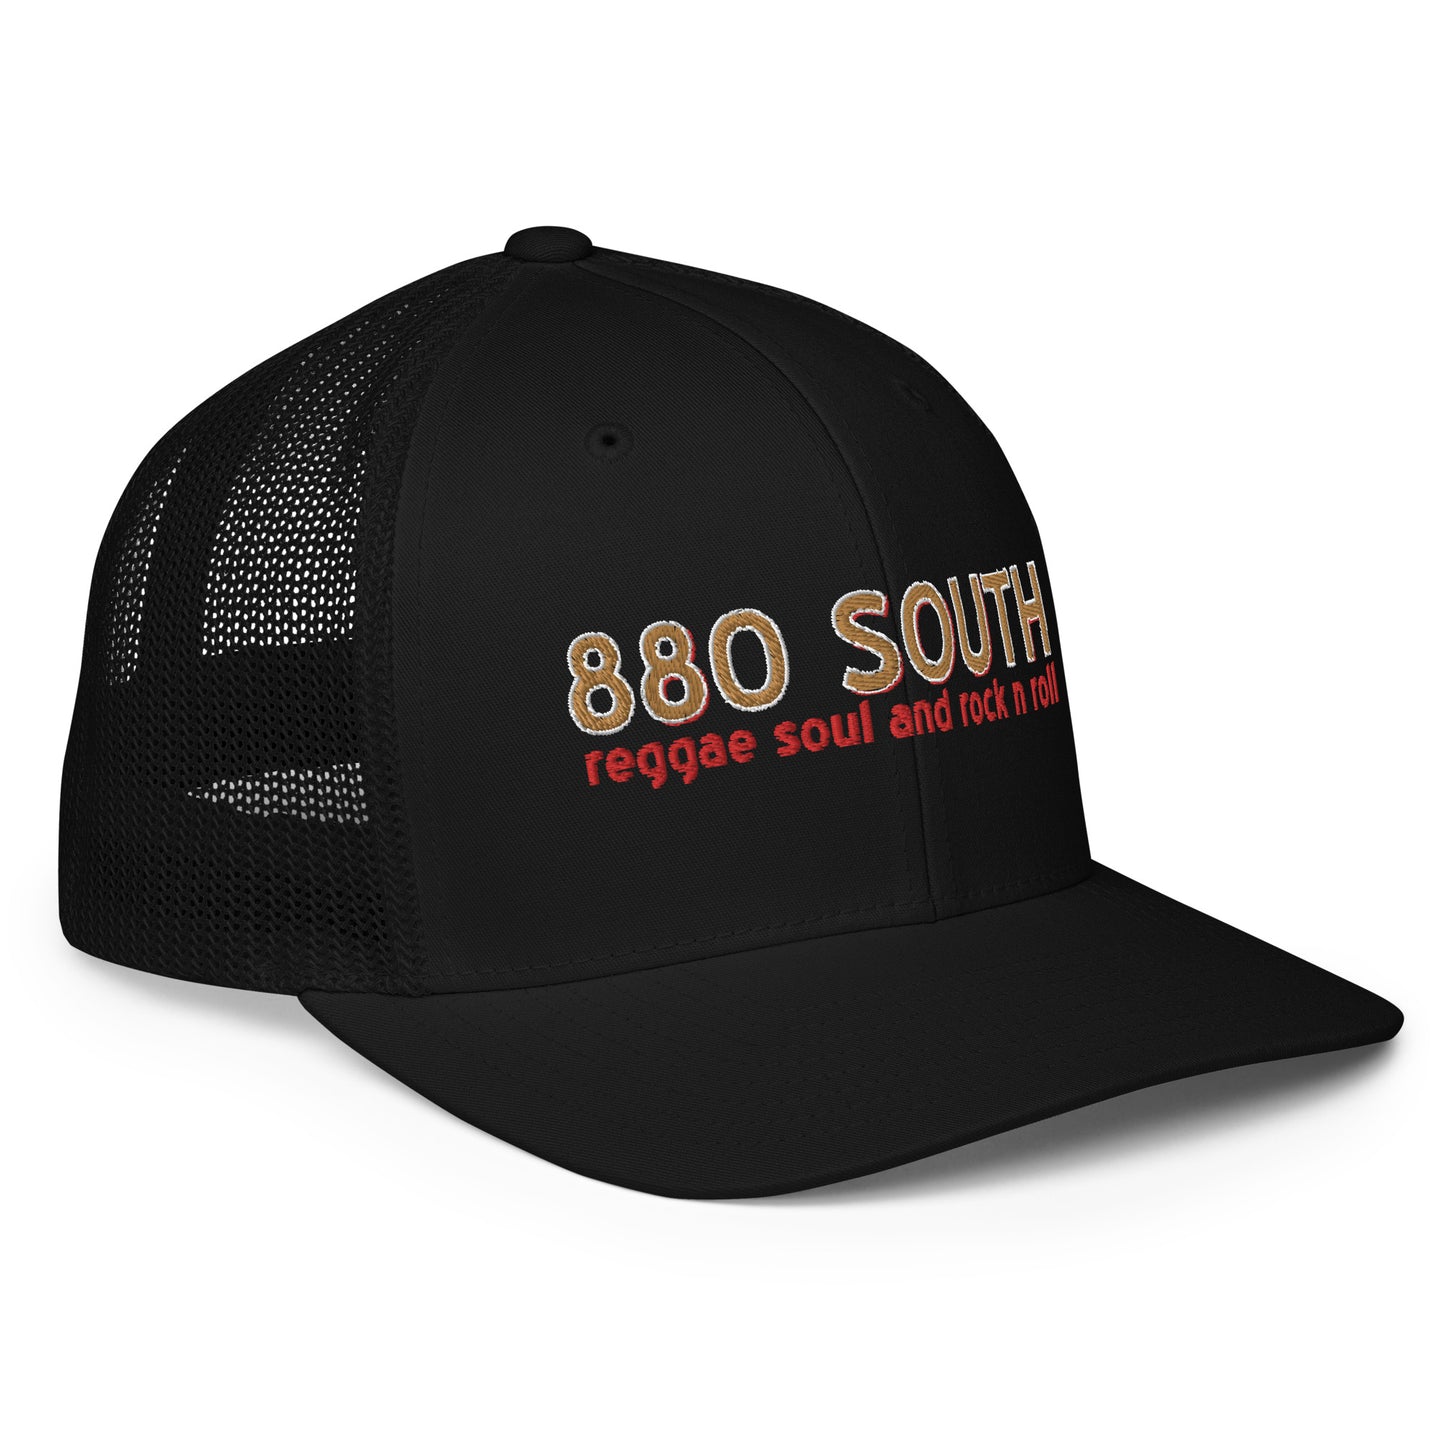 880 South Bay Area - Closed-back trucker cap